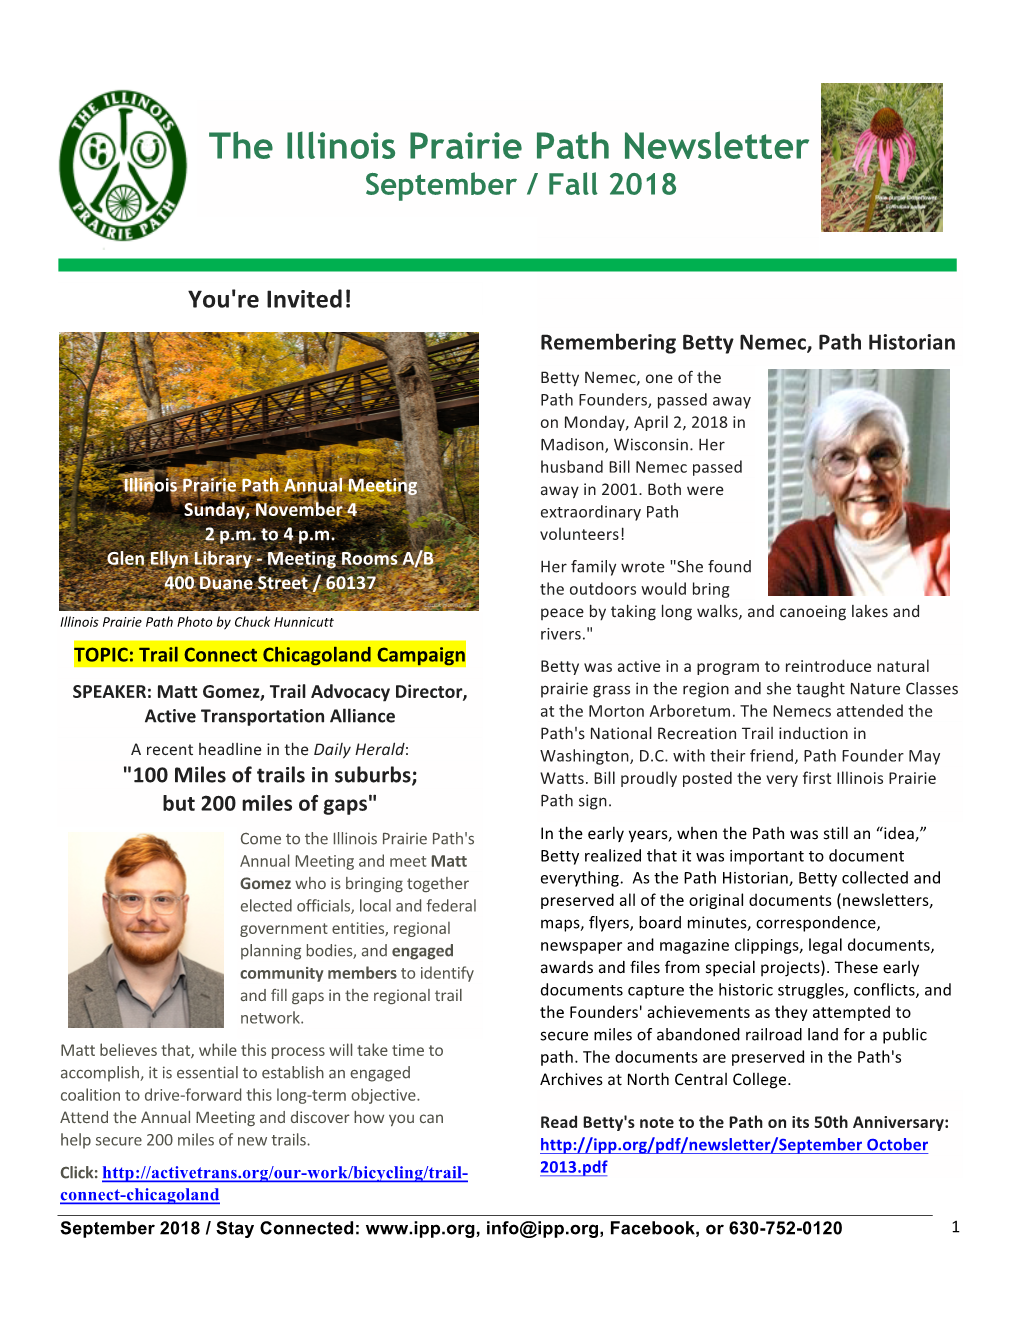 The Illinois Prairie Path Newsletter September / Fall 2018